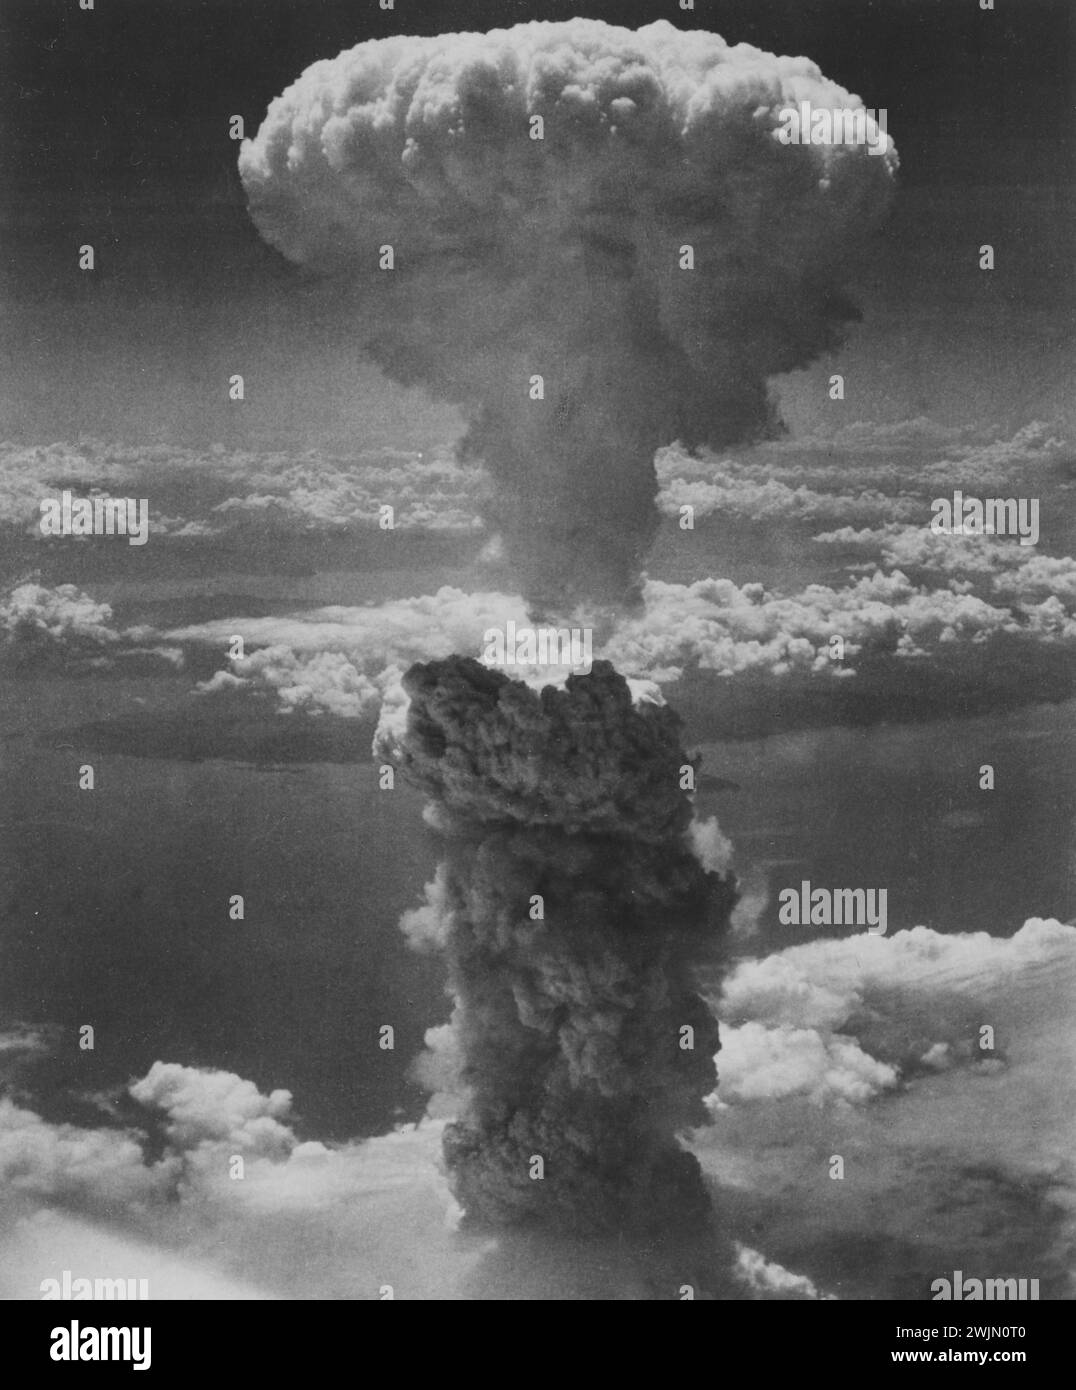 Nagasaki, Japan under atomic bomb attack - U.S. Army photo Stock Photo